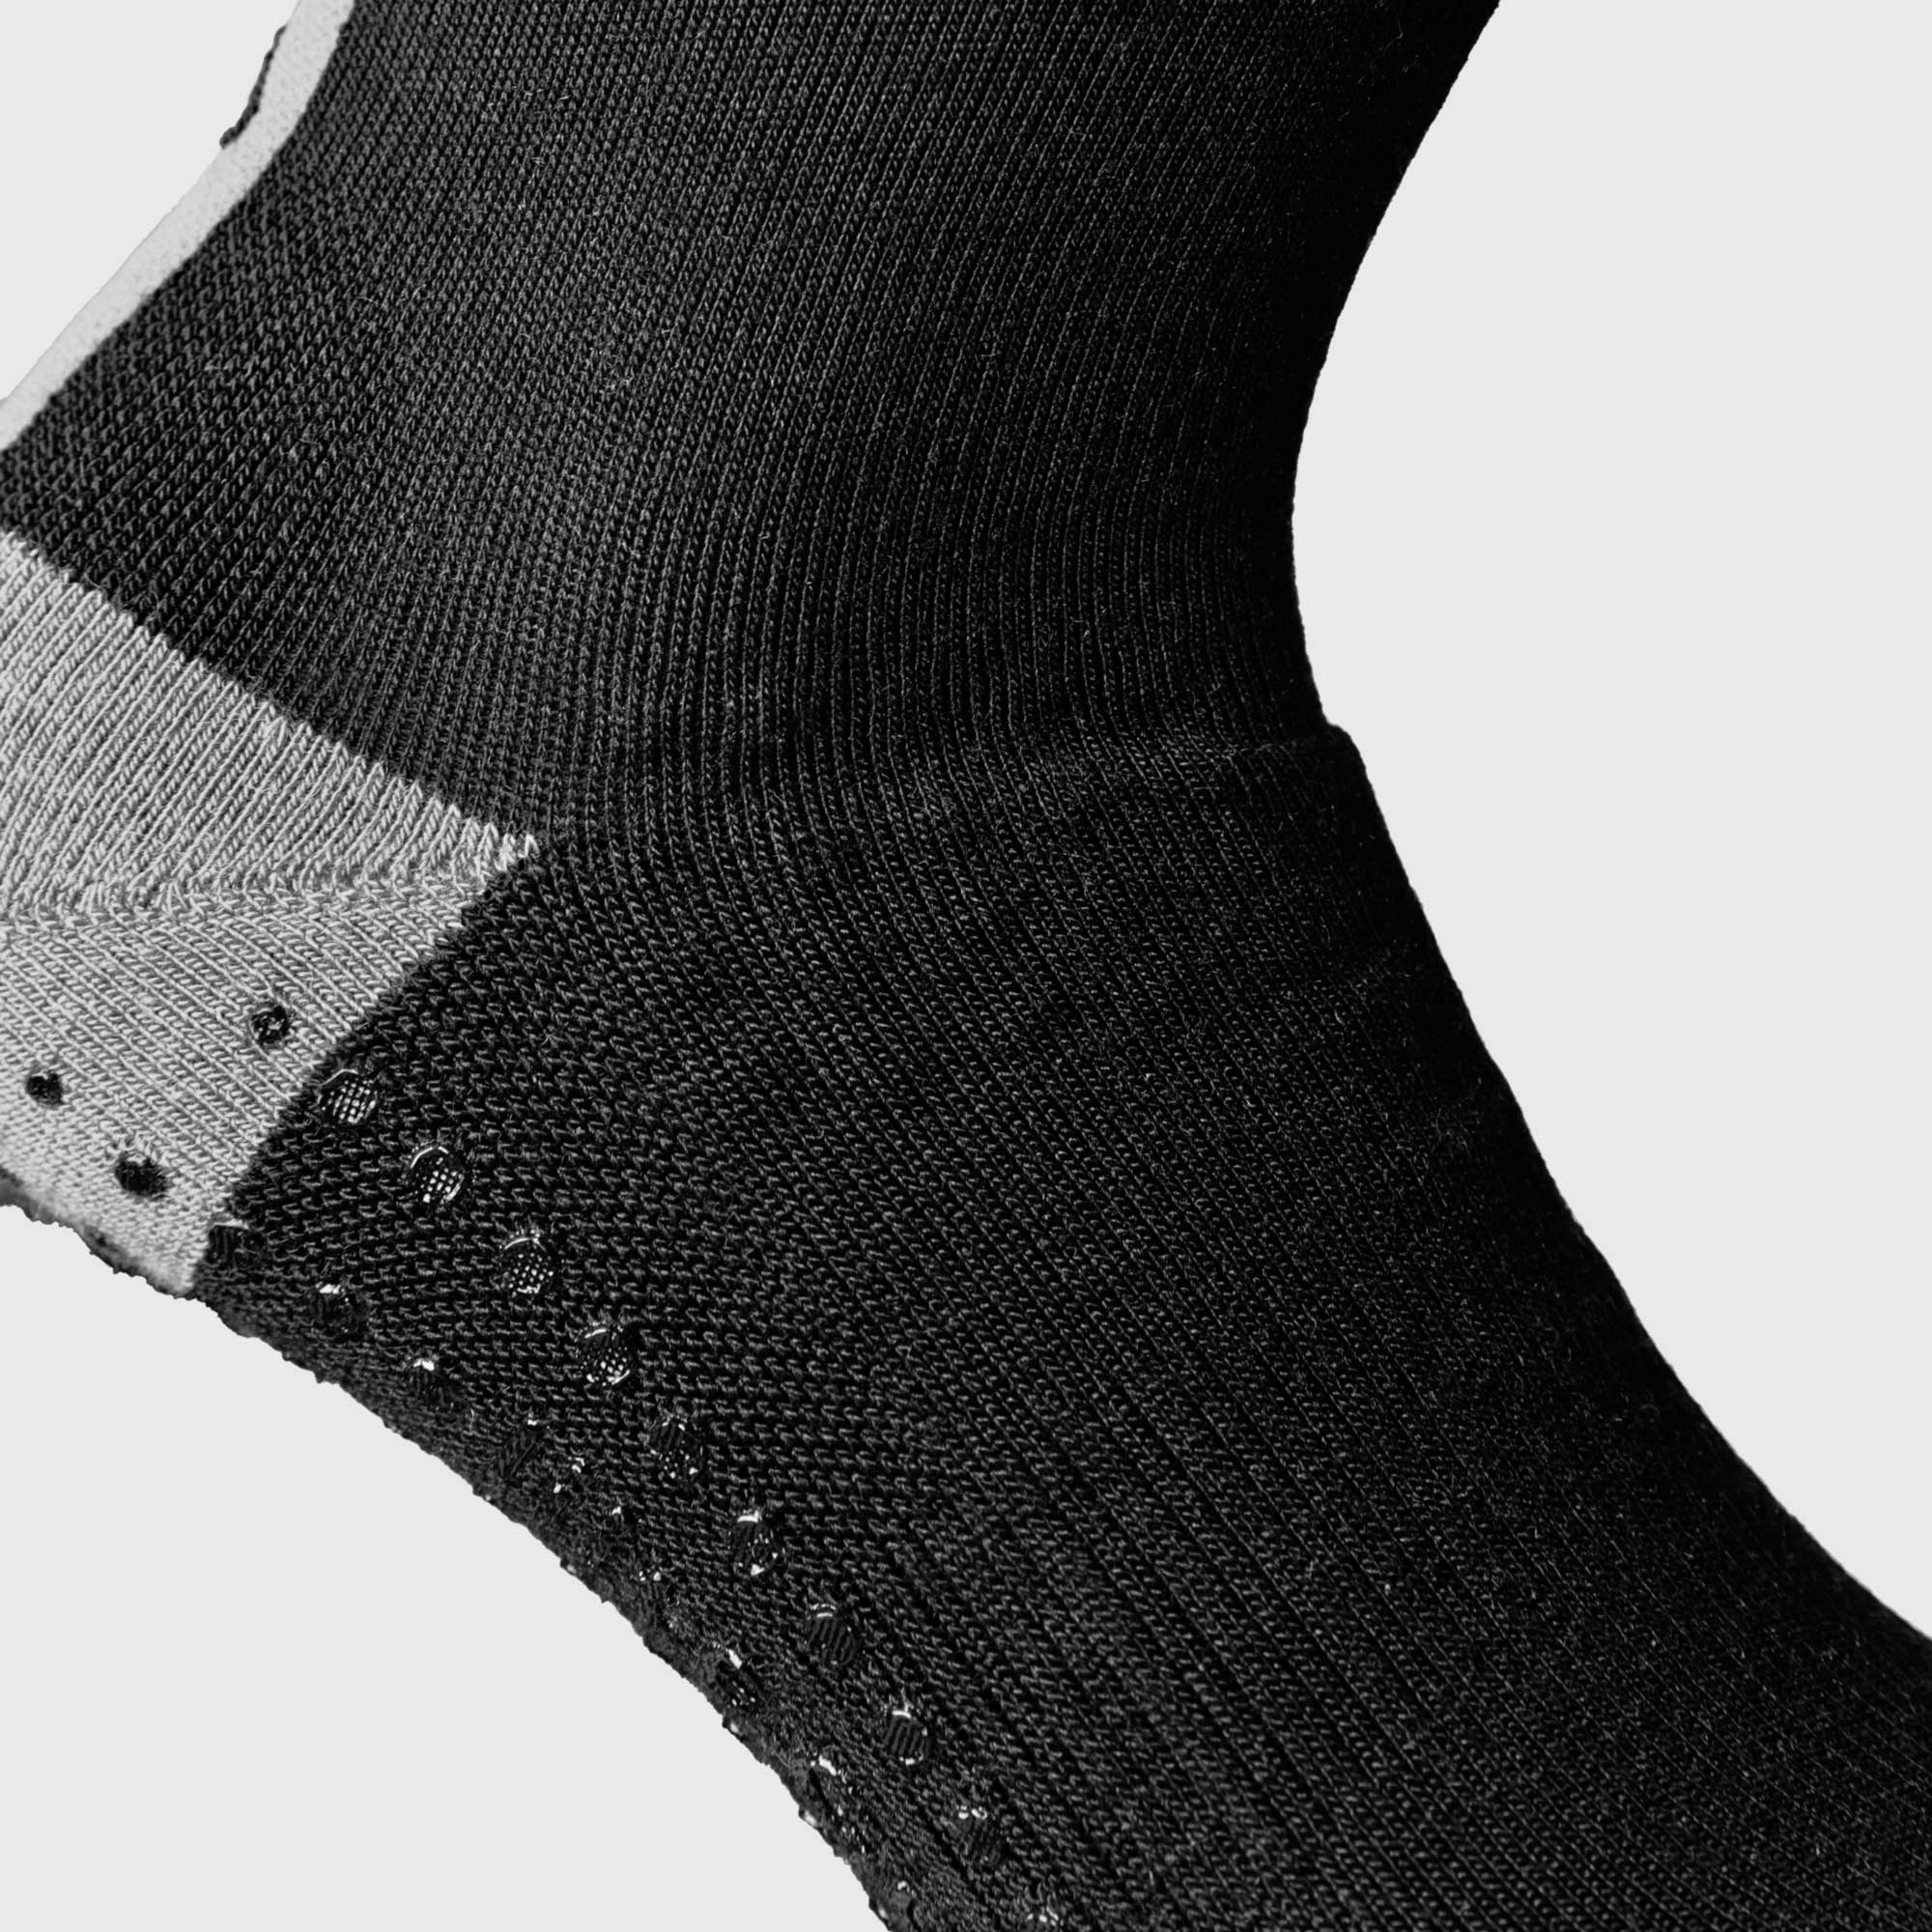 Liiteguard MERINO PRO-TECH Medium socks BLACK